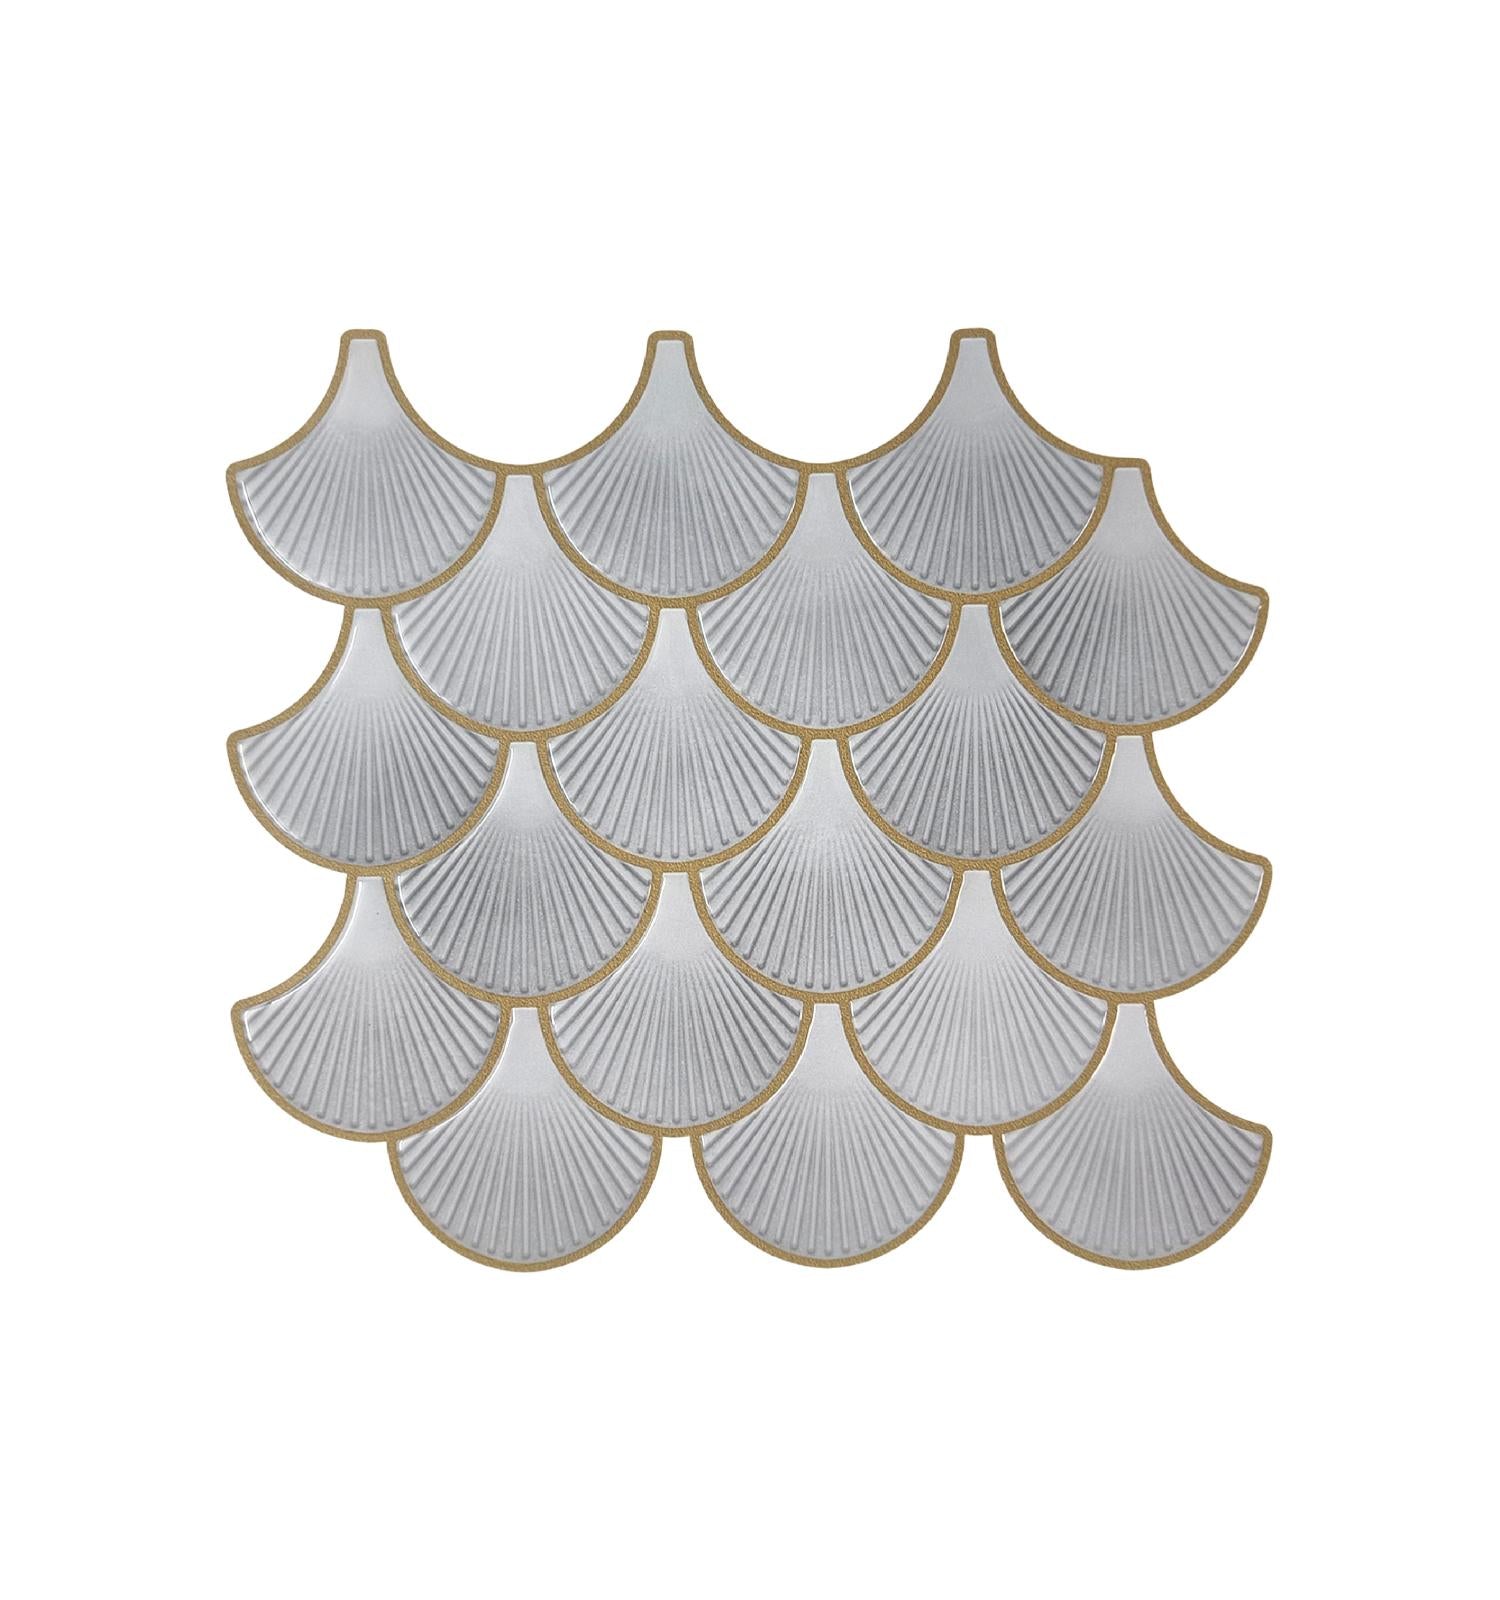 Snowhite Fishscale Peel and Stick Wall Tile | Kitchen Backsplash Tiles | Self Adhesive Tiles For Home Decor